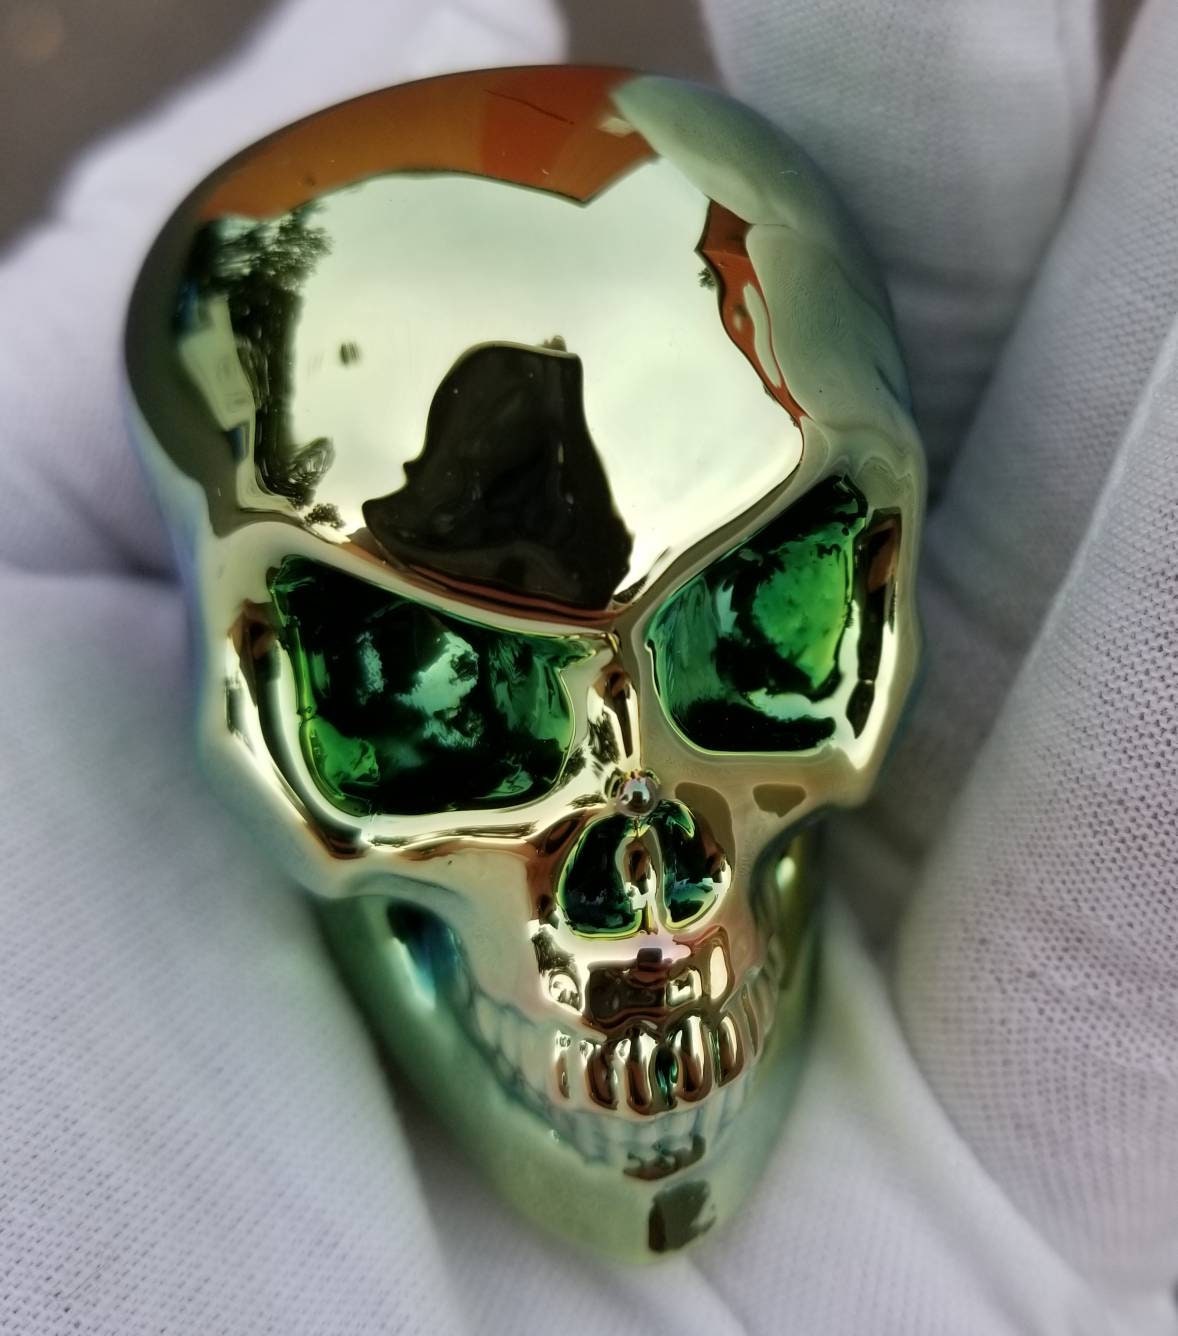 Pipa Metal Skull bronze 85cm  Pipa para fumar hash o marihuana